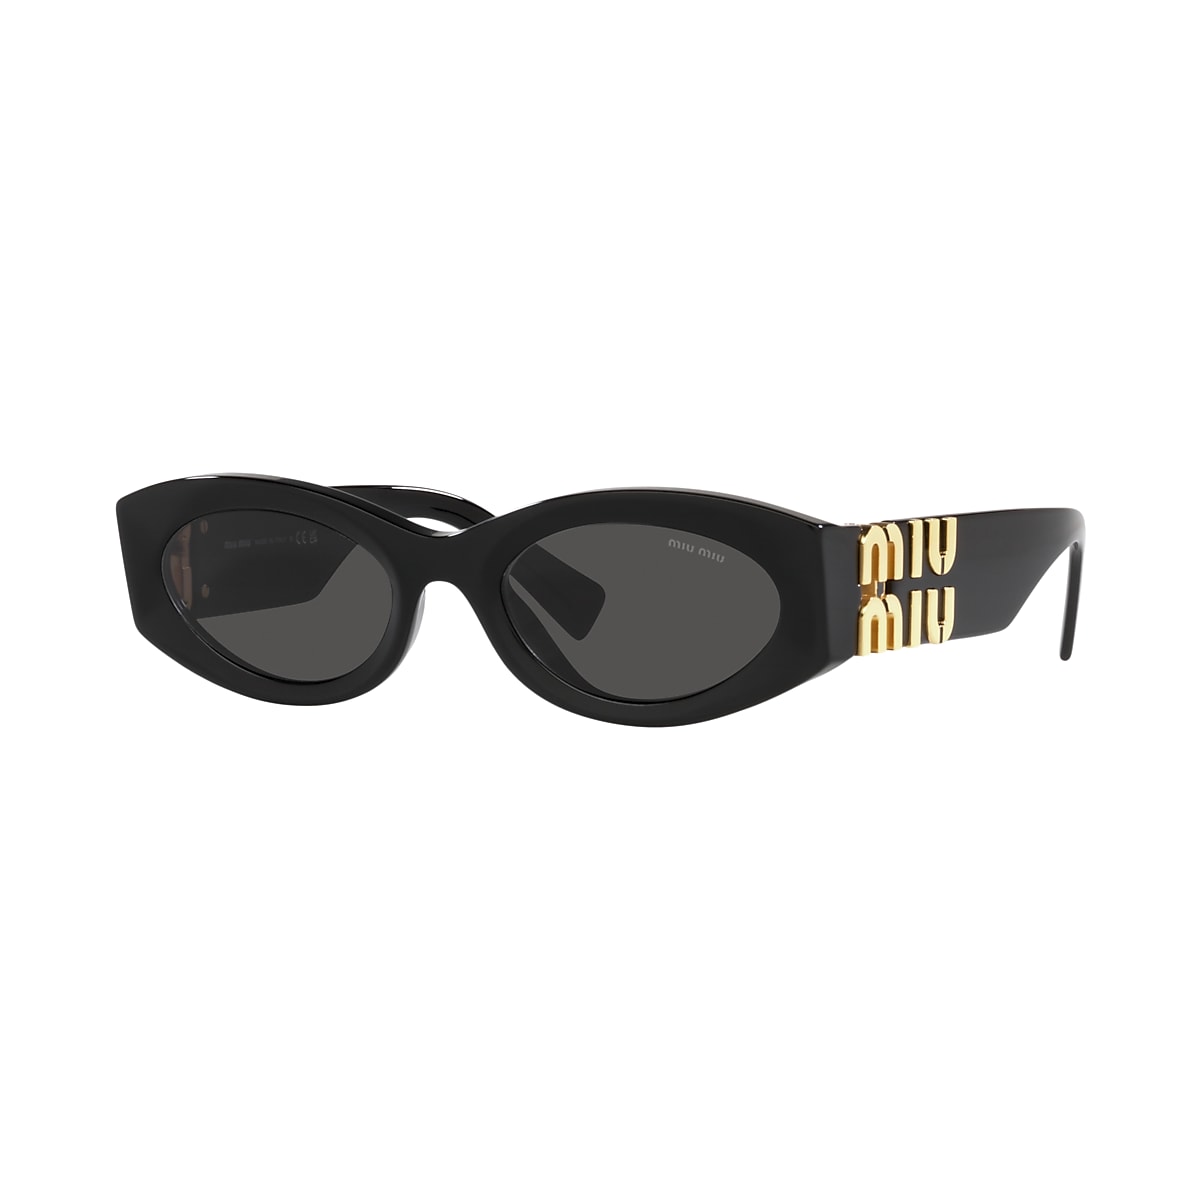 Miu Miu MU 54 Dark Grey Sunglasses | Sunglass USA